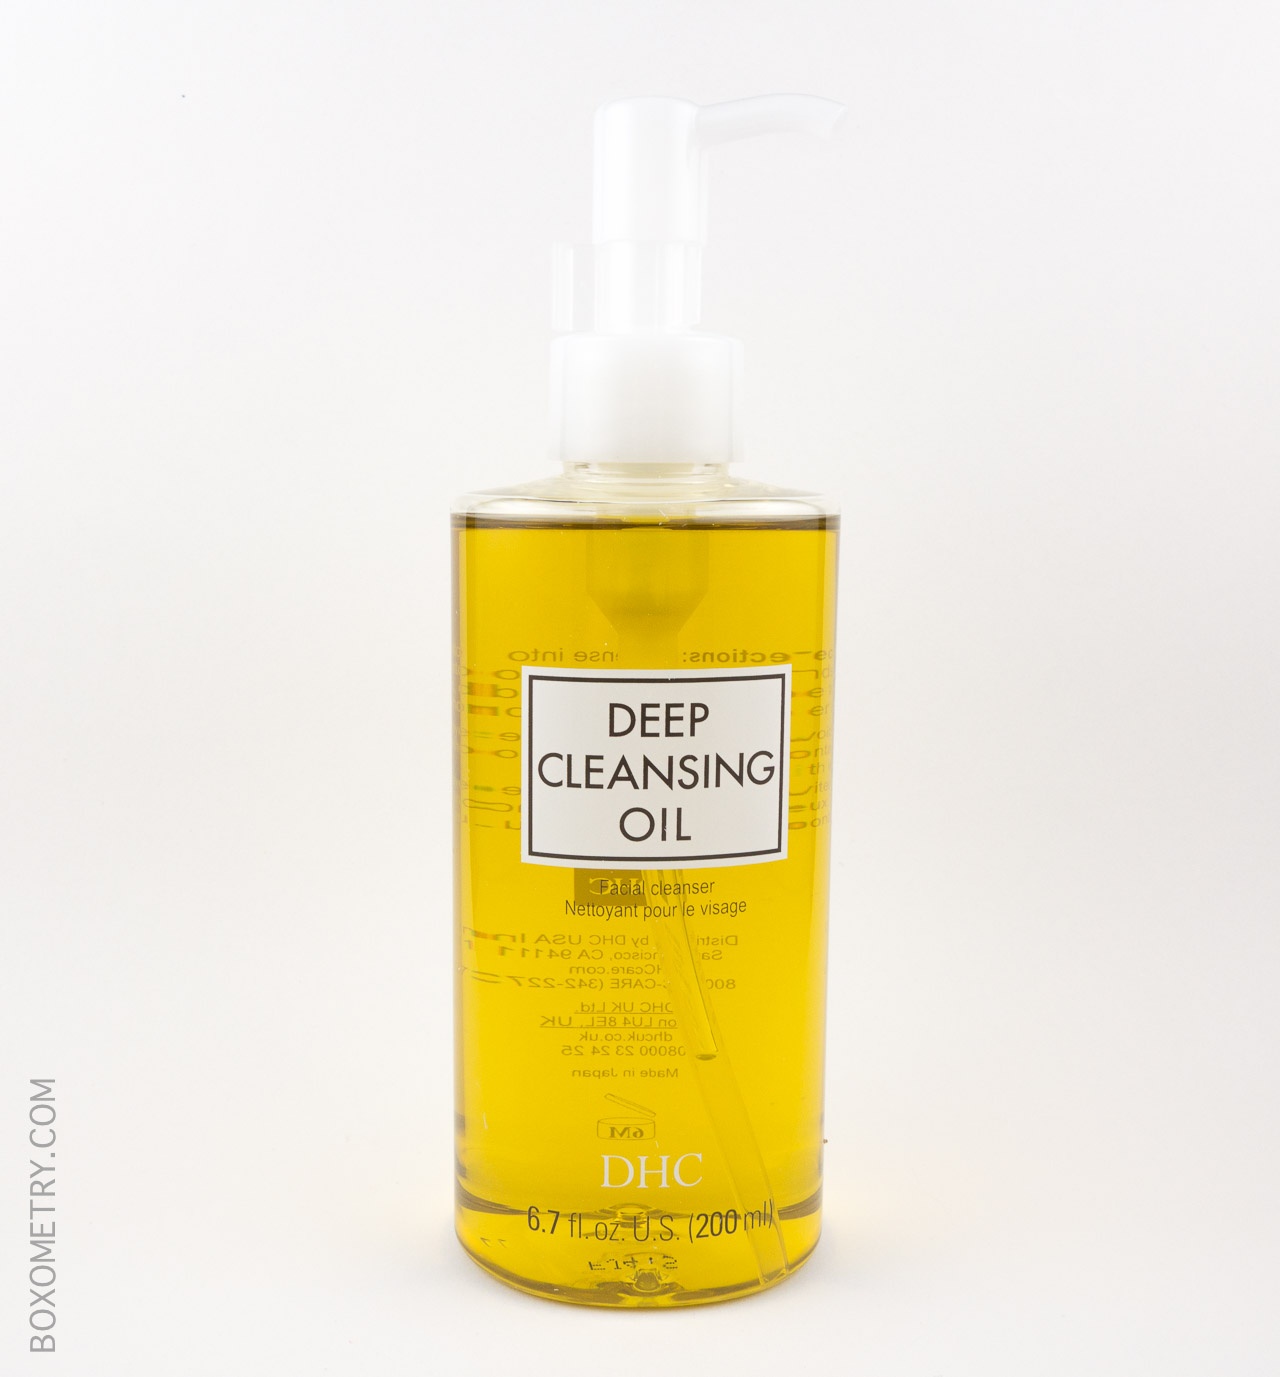 BeautyFIX April 2015 DHC Deep Cleansing Oil